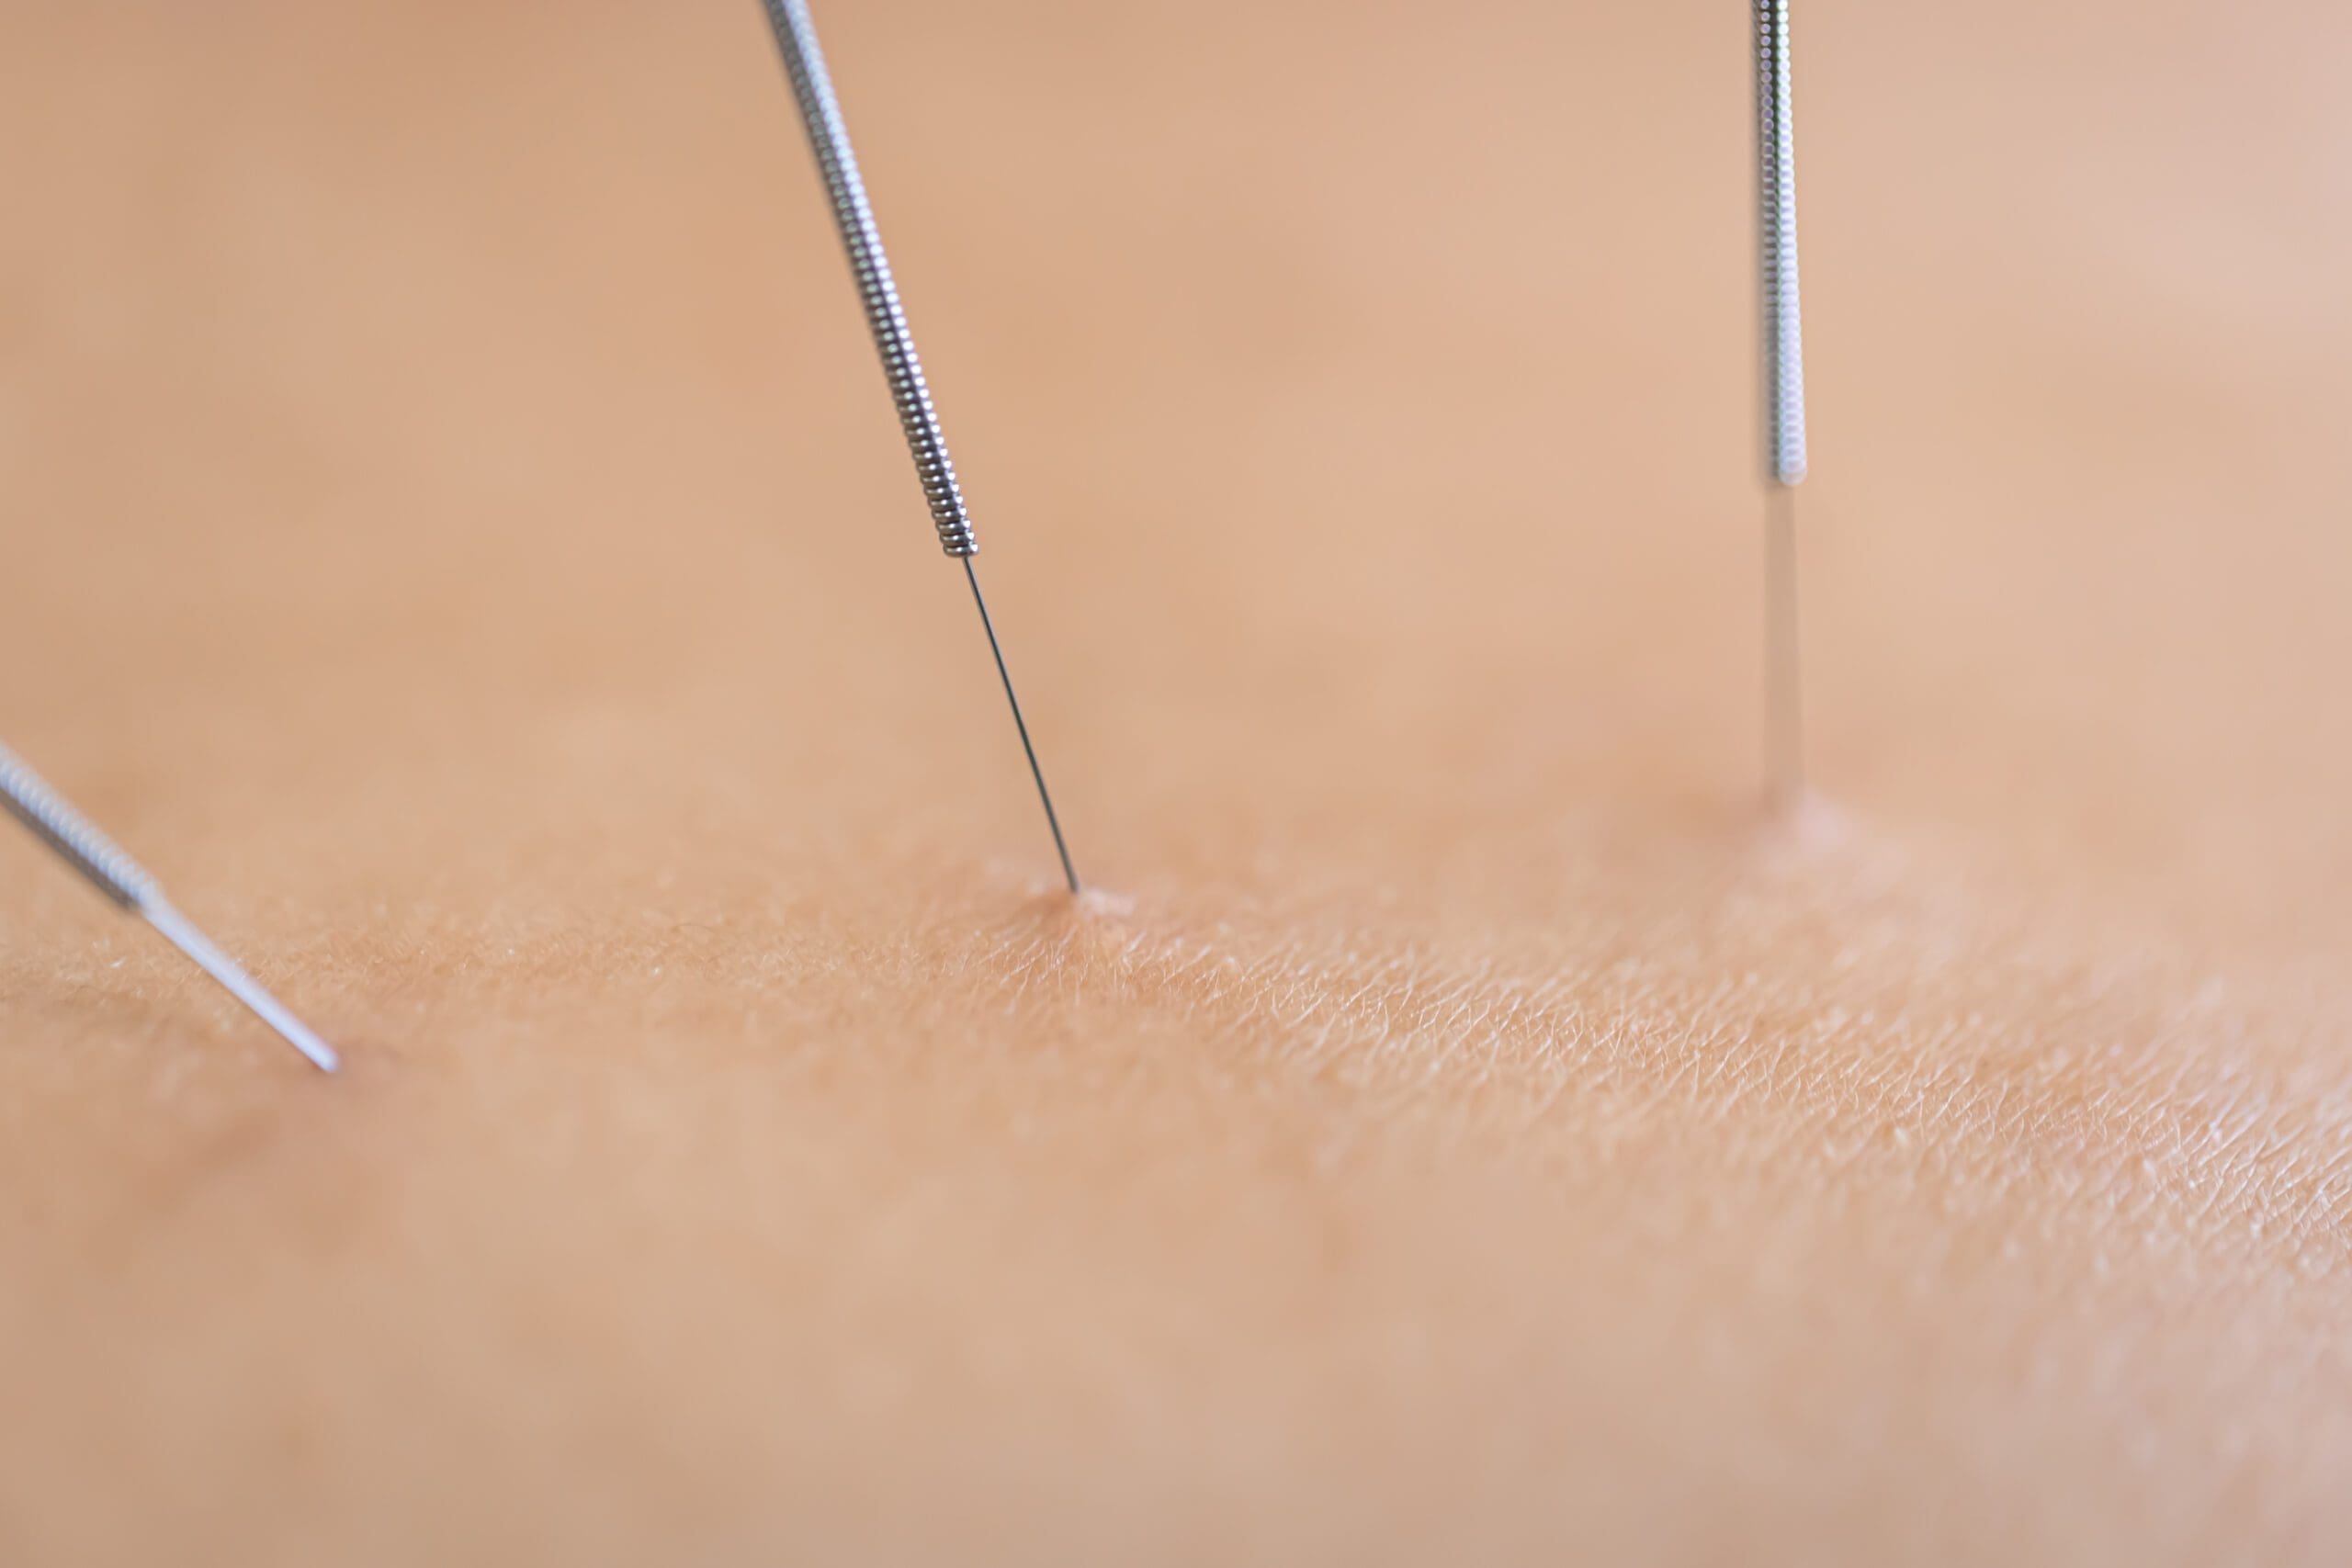 Dry needling acupuncture needles